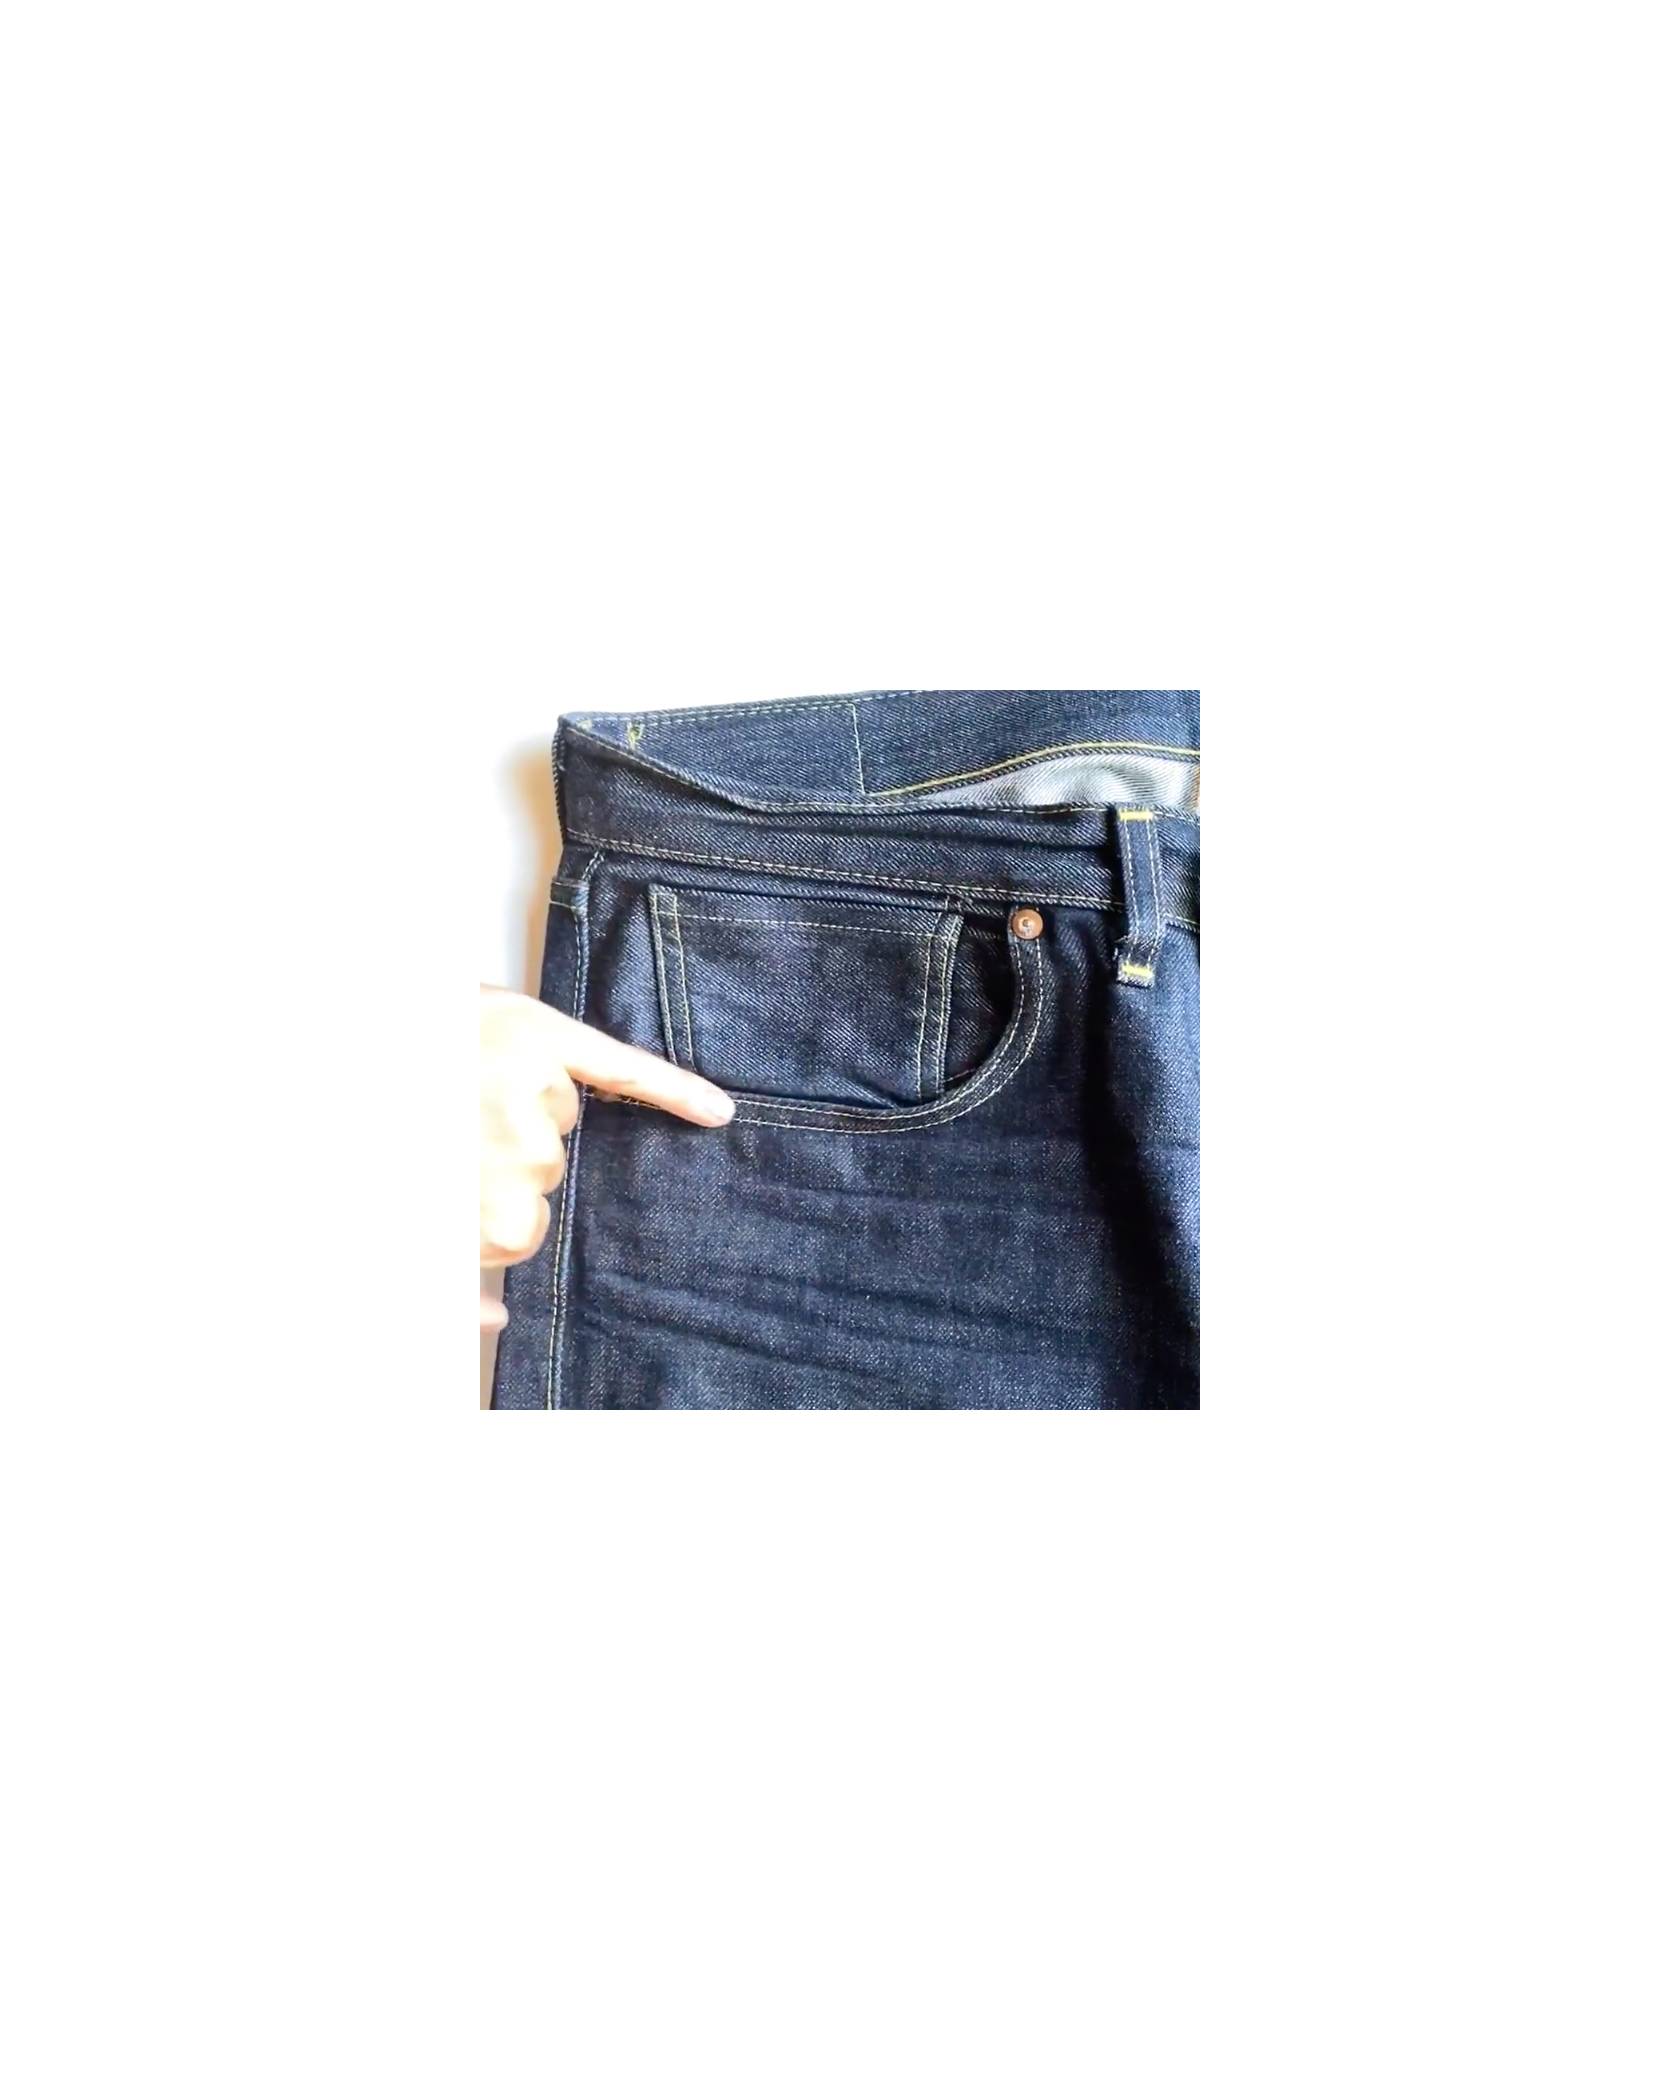 A lockstitch on the pocket of jeans